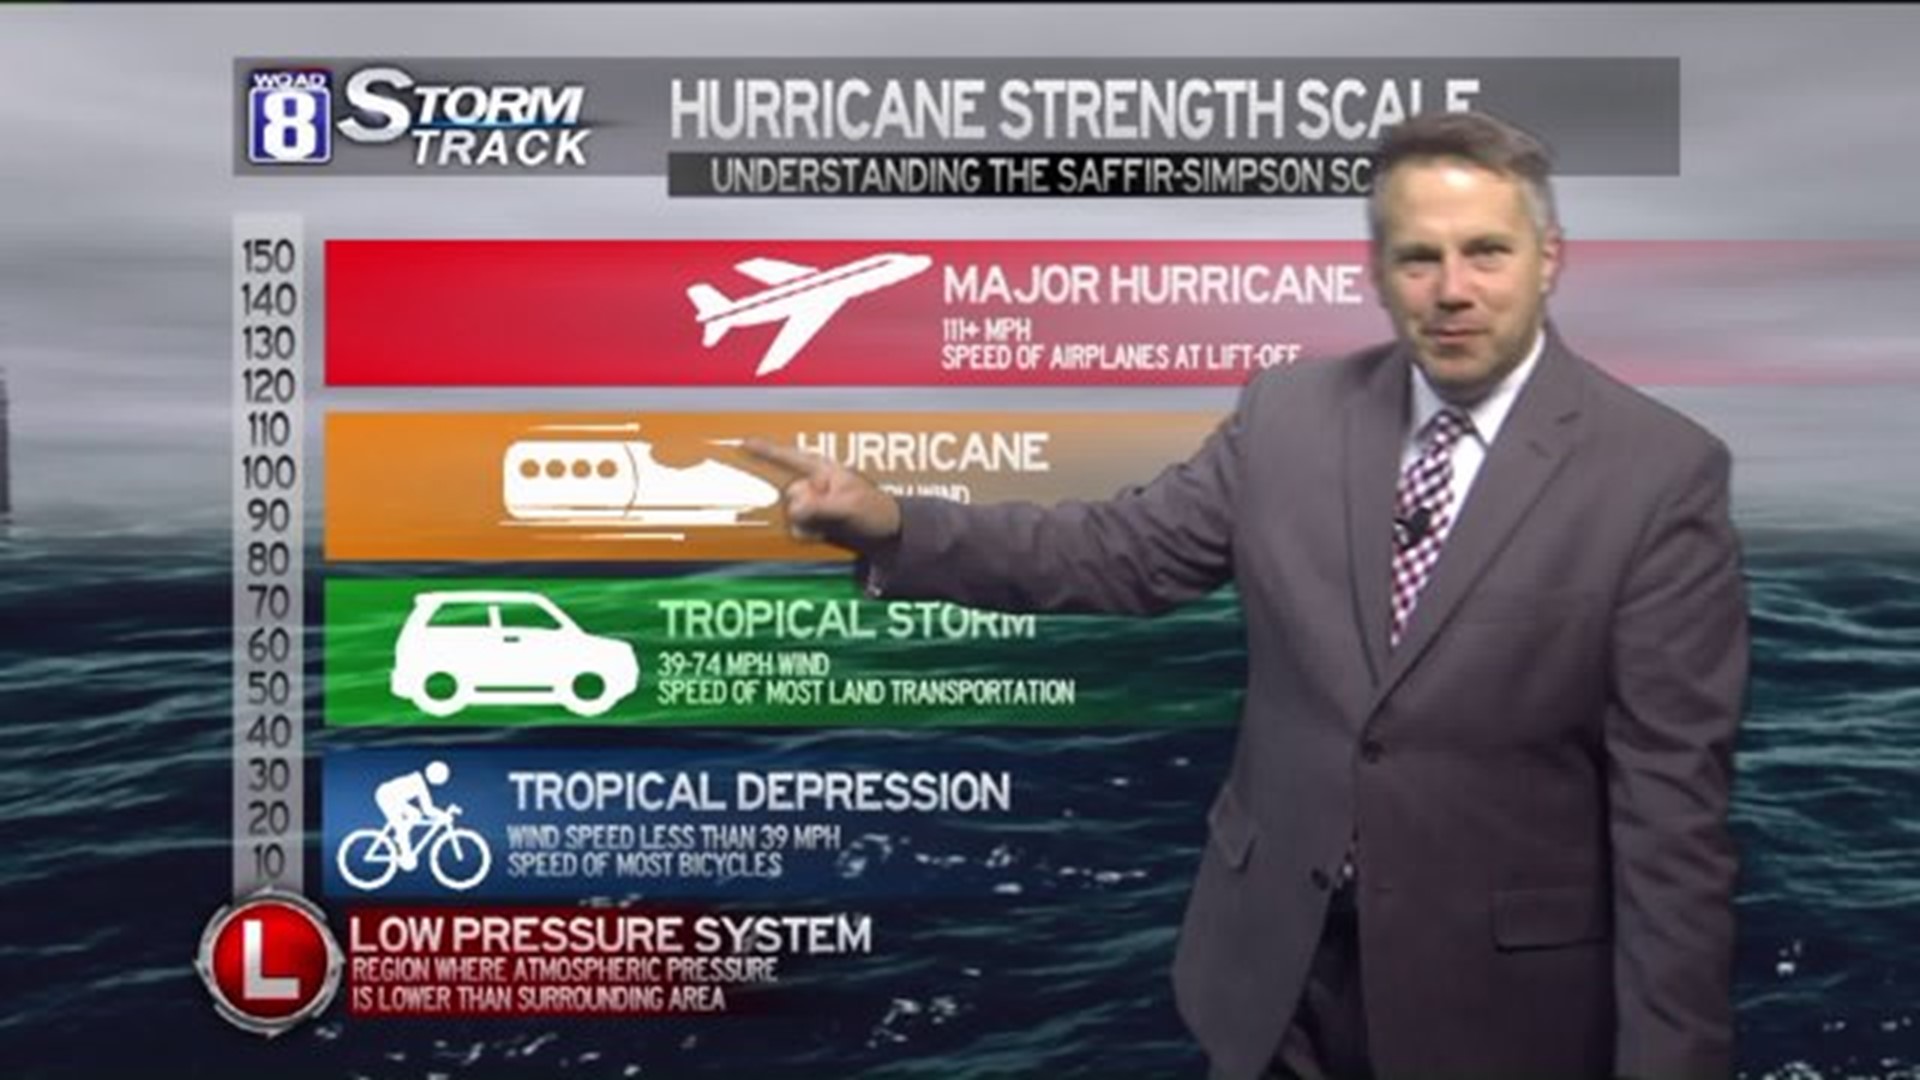 Eric explains hurricane categories